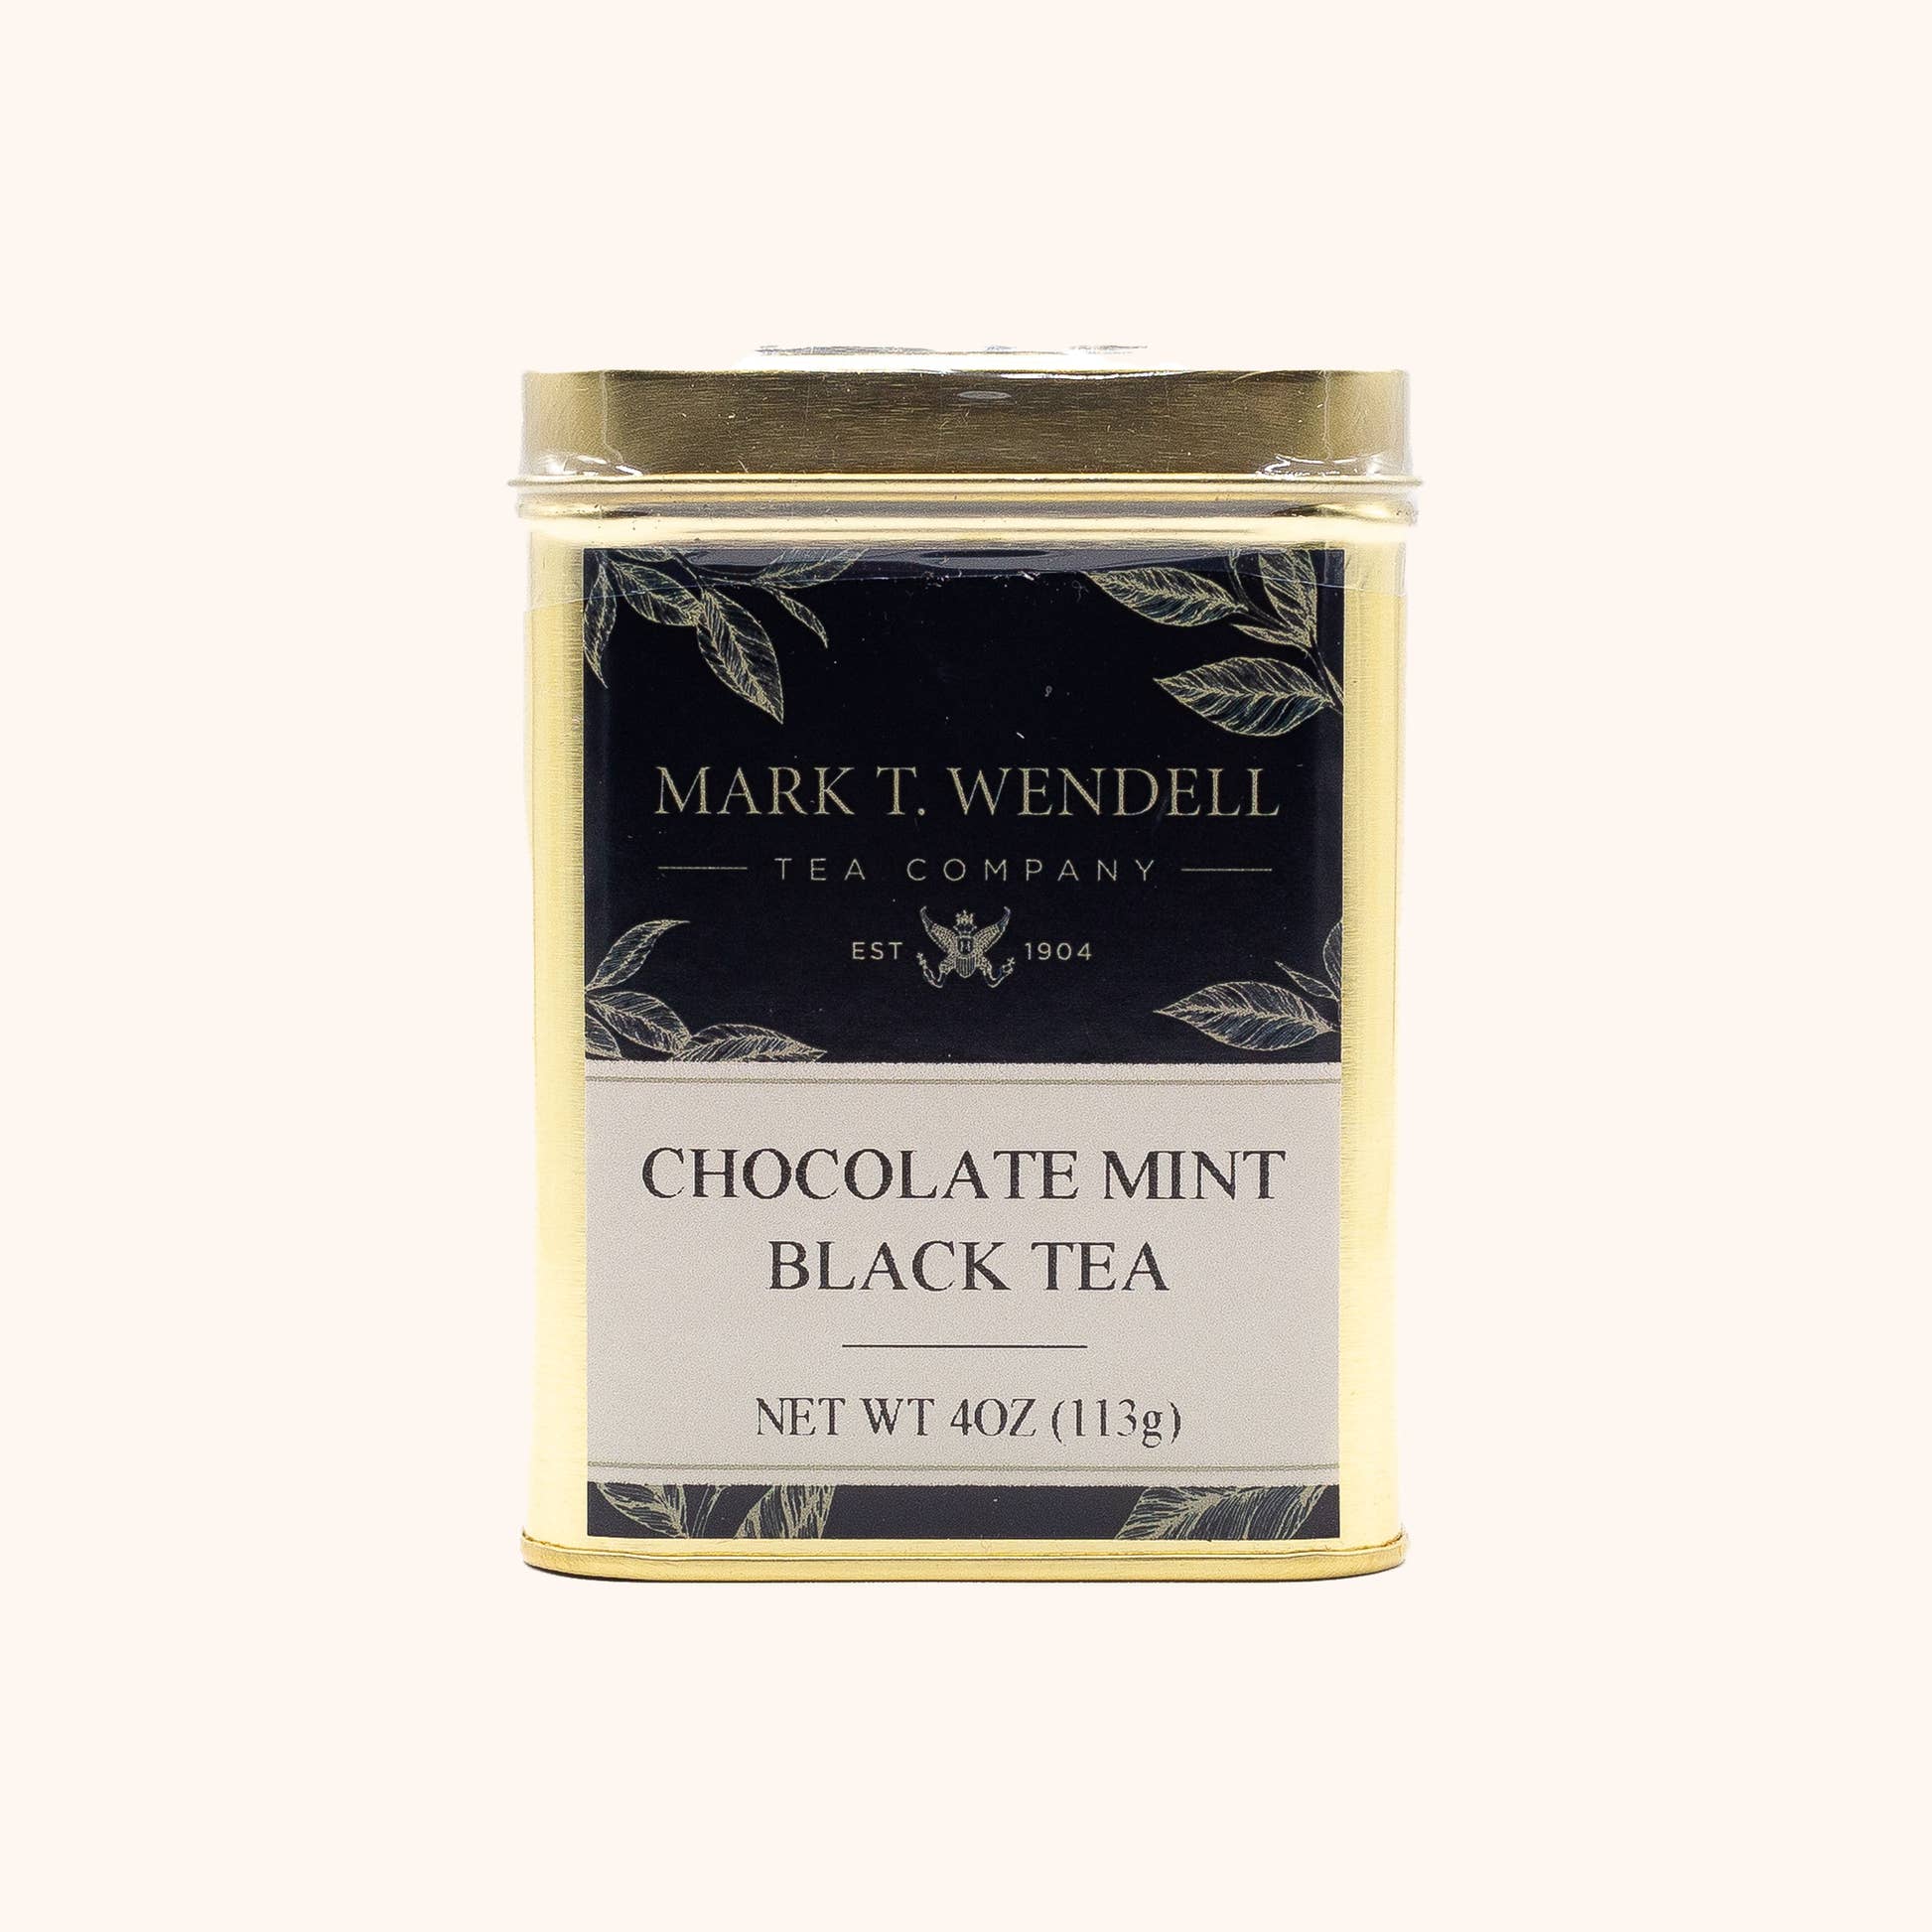 Chocolate Mint Black Tea by Mark T. Wendell Tea Company loose tea tin